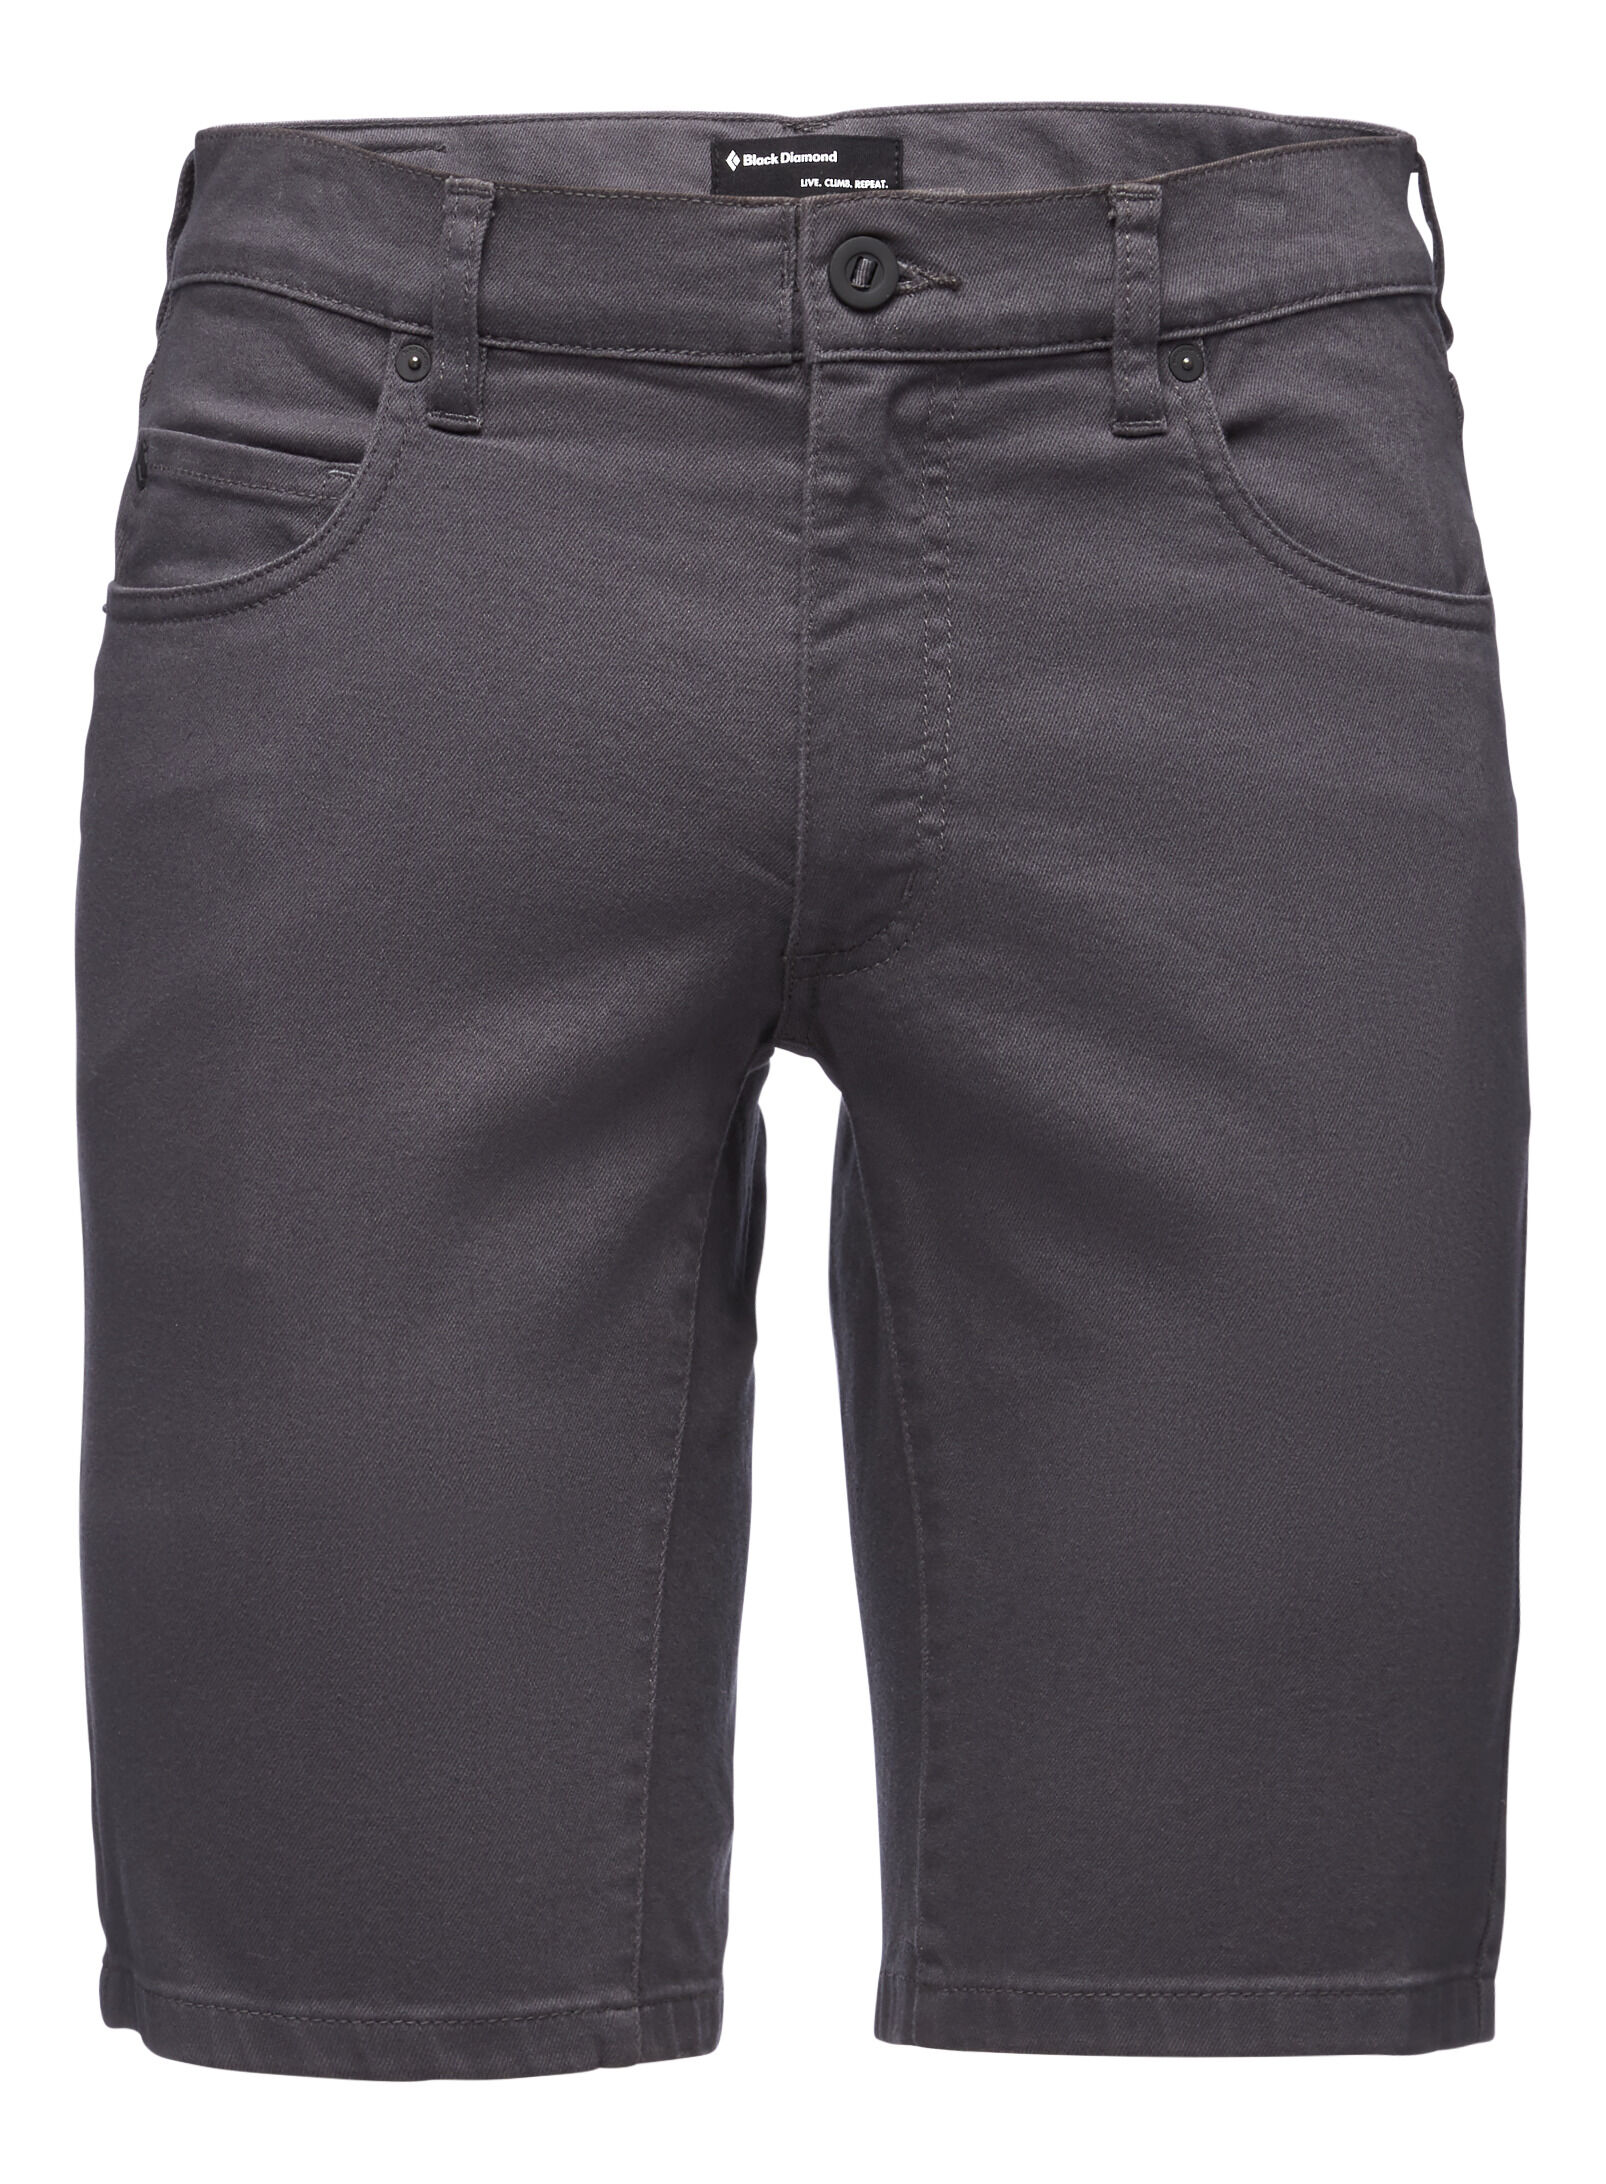 Black Diamond - Stretch Font Shorts - Climbing pants - Men's